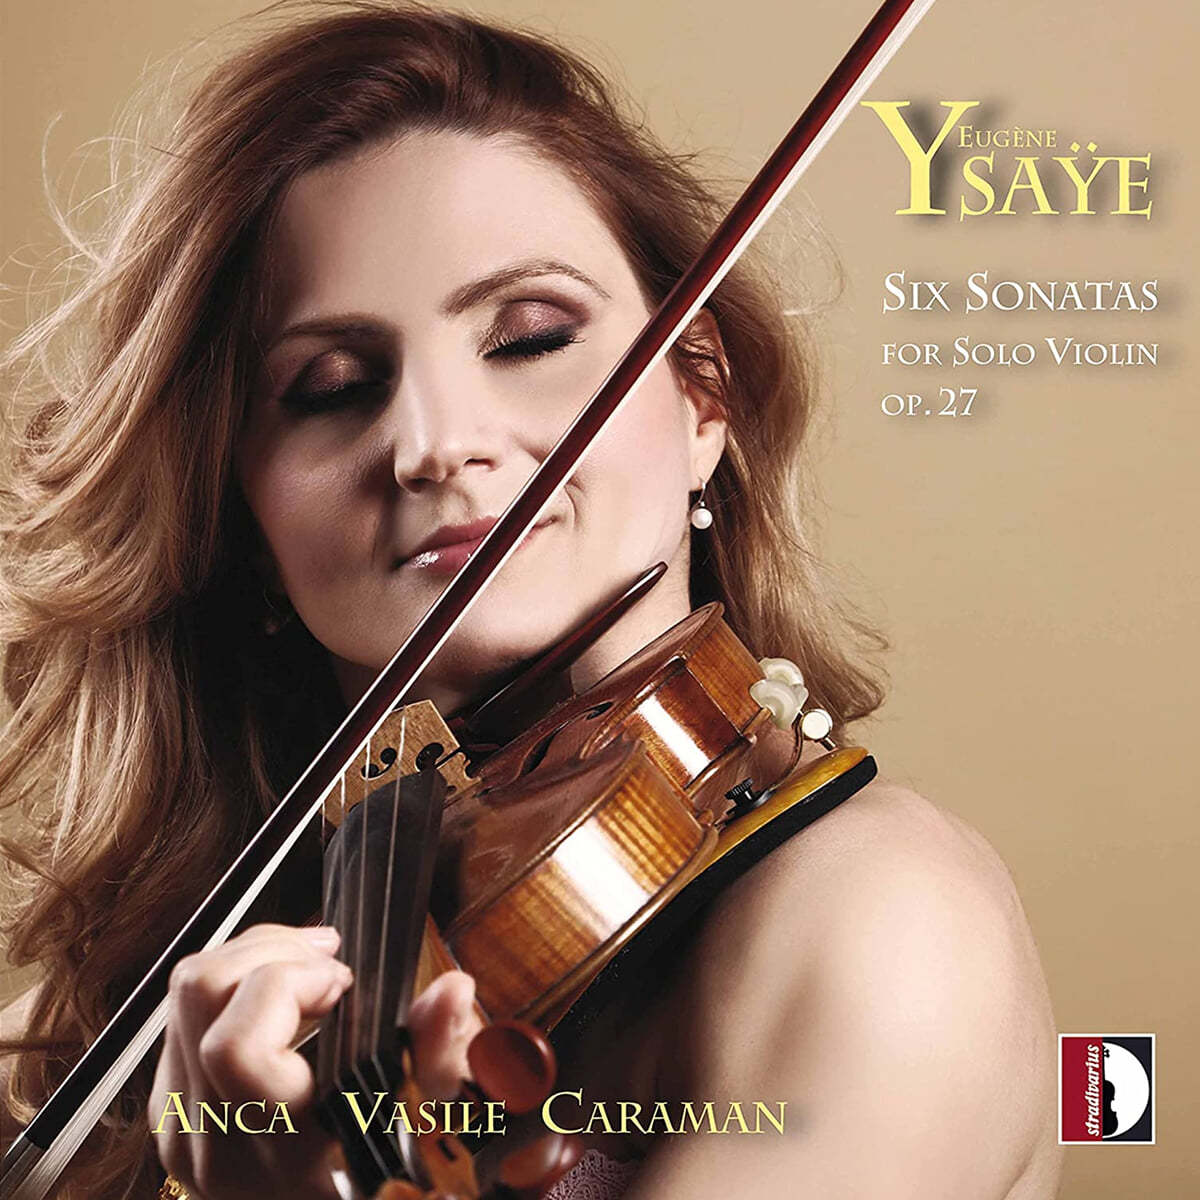 Anca Vasile Caraman 이자이: 여섯 개의 무반주 바이올린 소나타 (Ysaye: Six Sonatas for Solo Violin Op.27) 